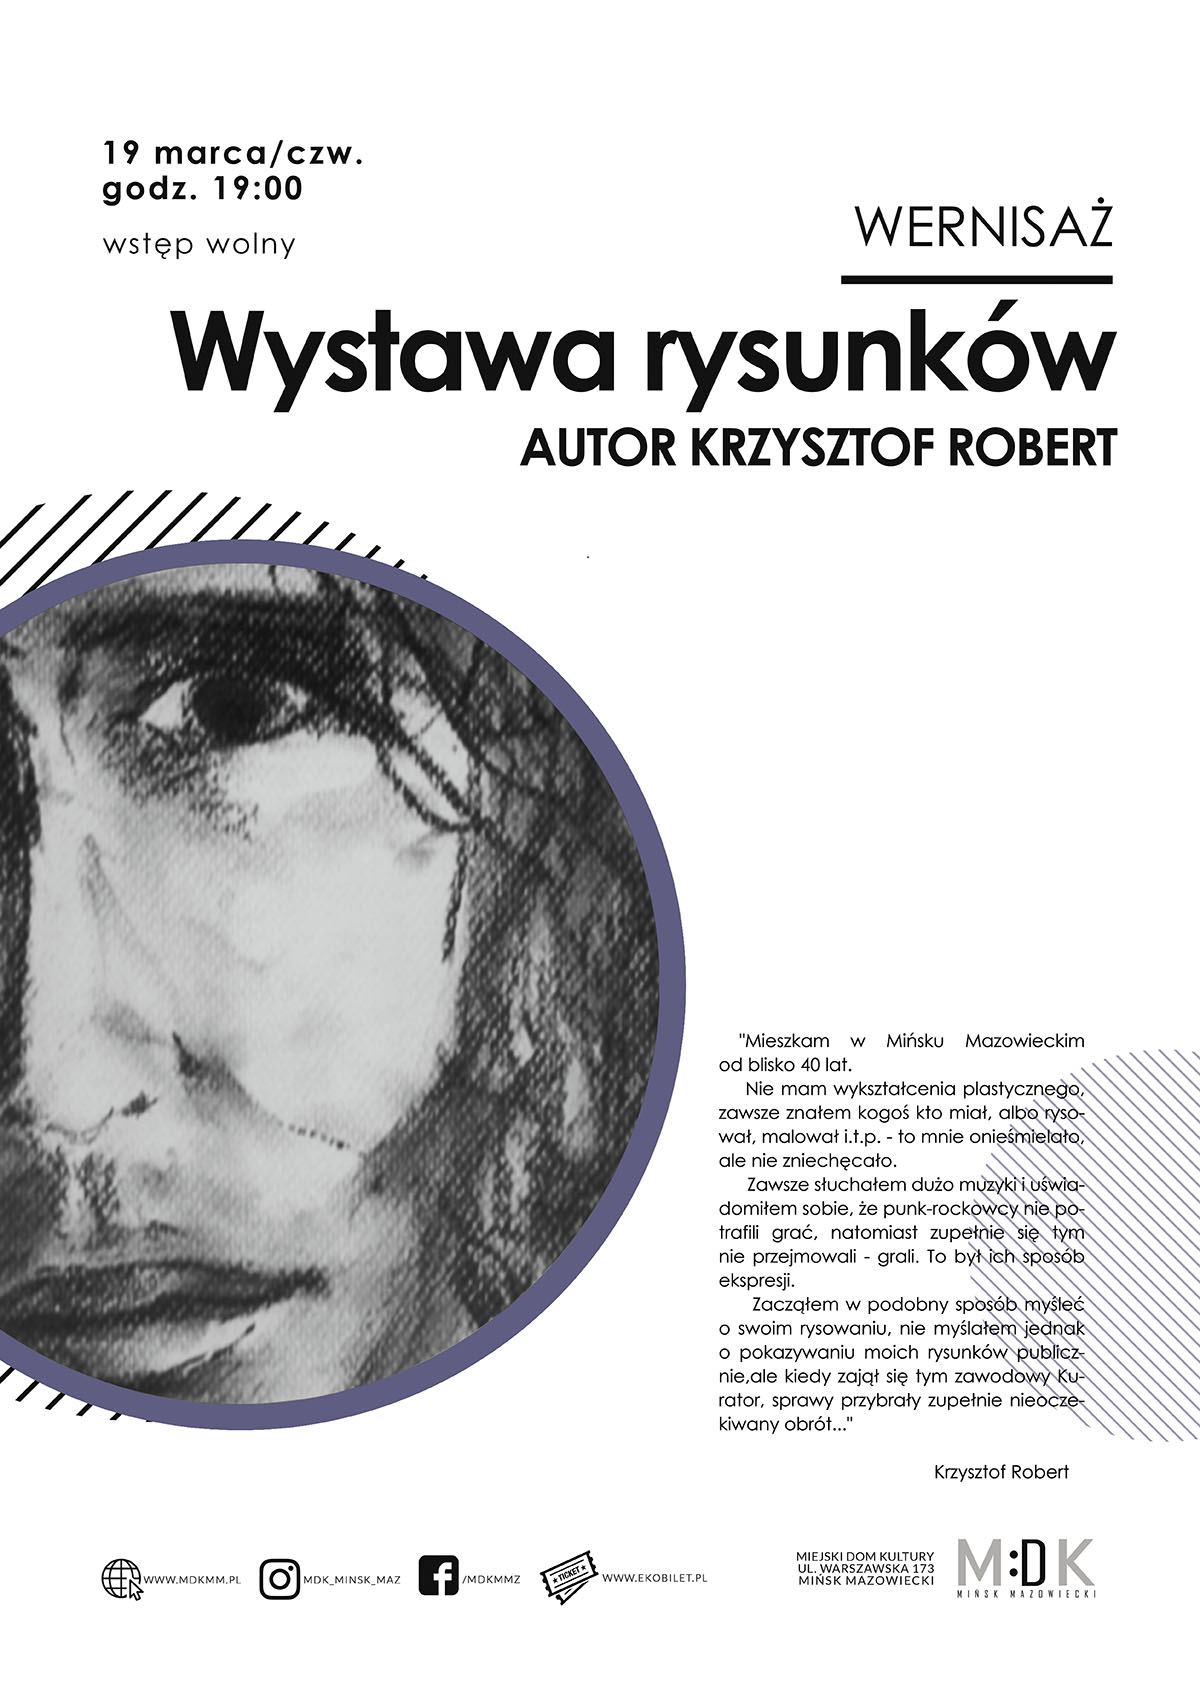 Krzysztof Robert - Rysunki - wernisaż